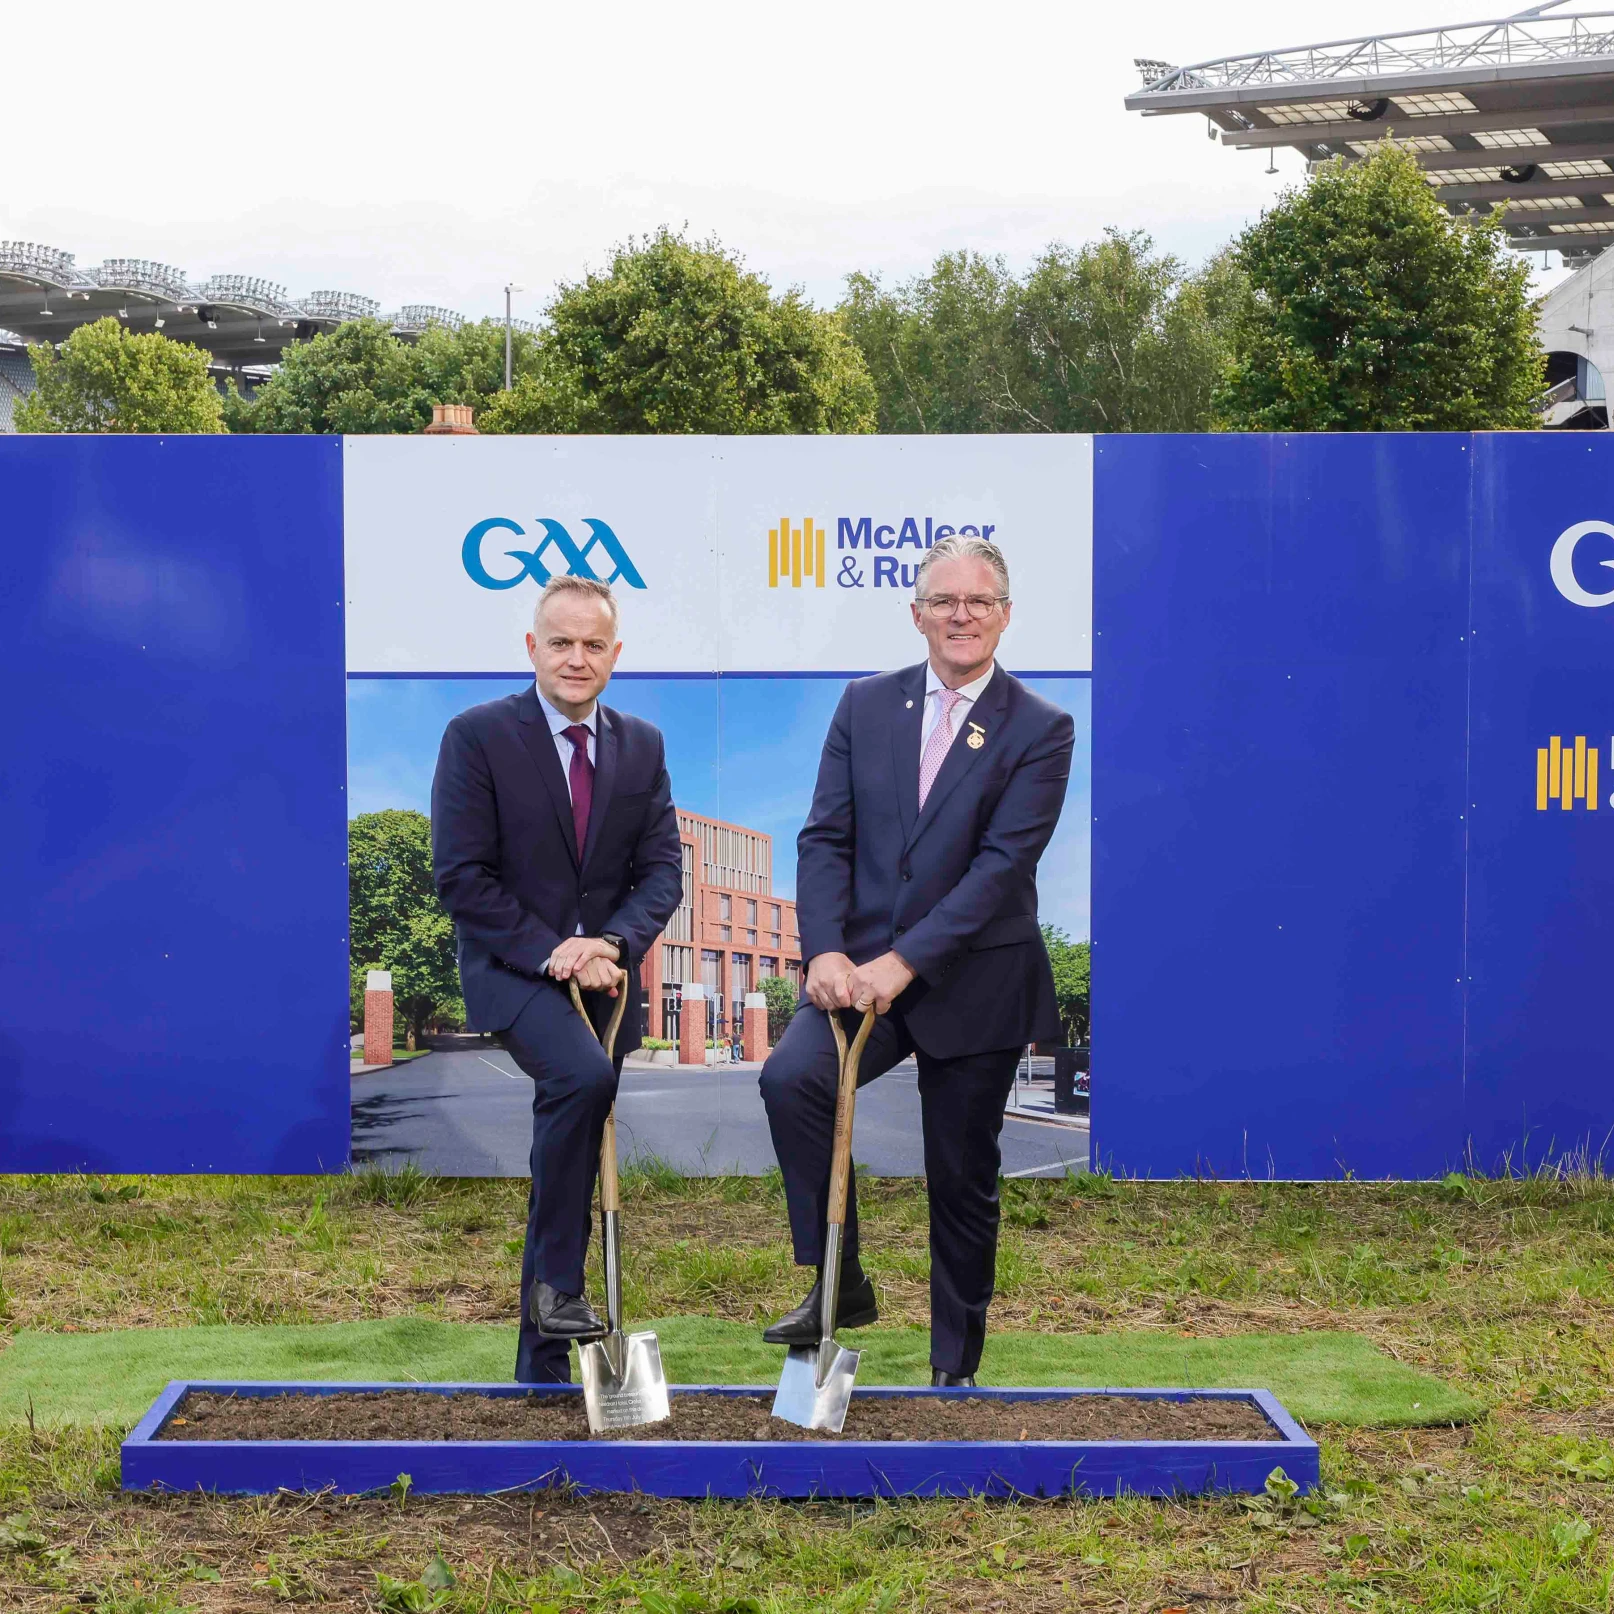 GAA and McAleer & Rushe break ground on new hotel at Croke Park